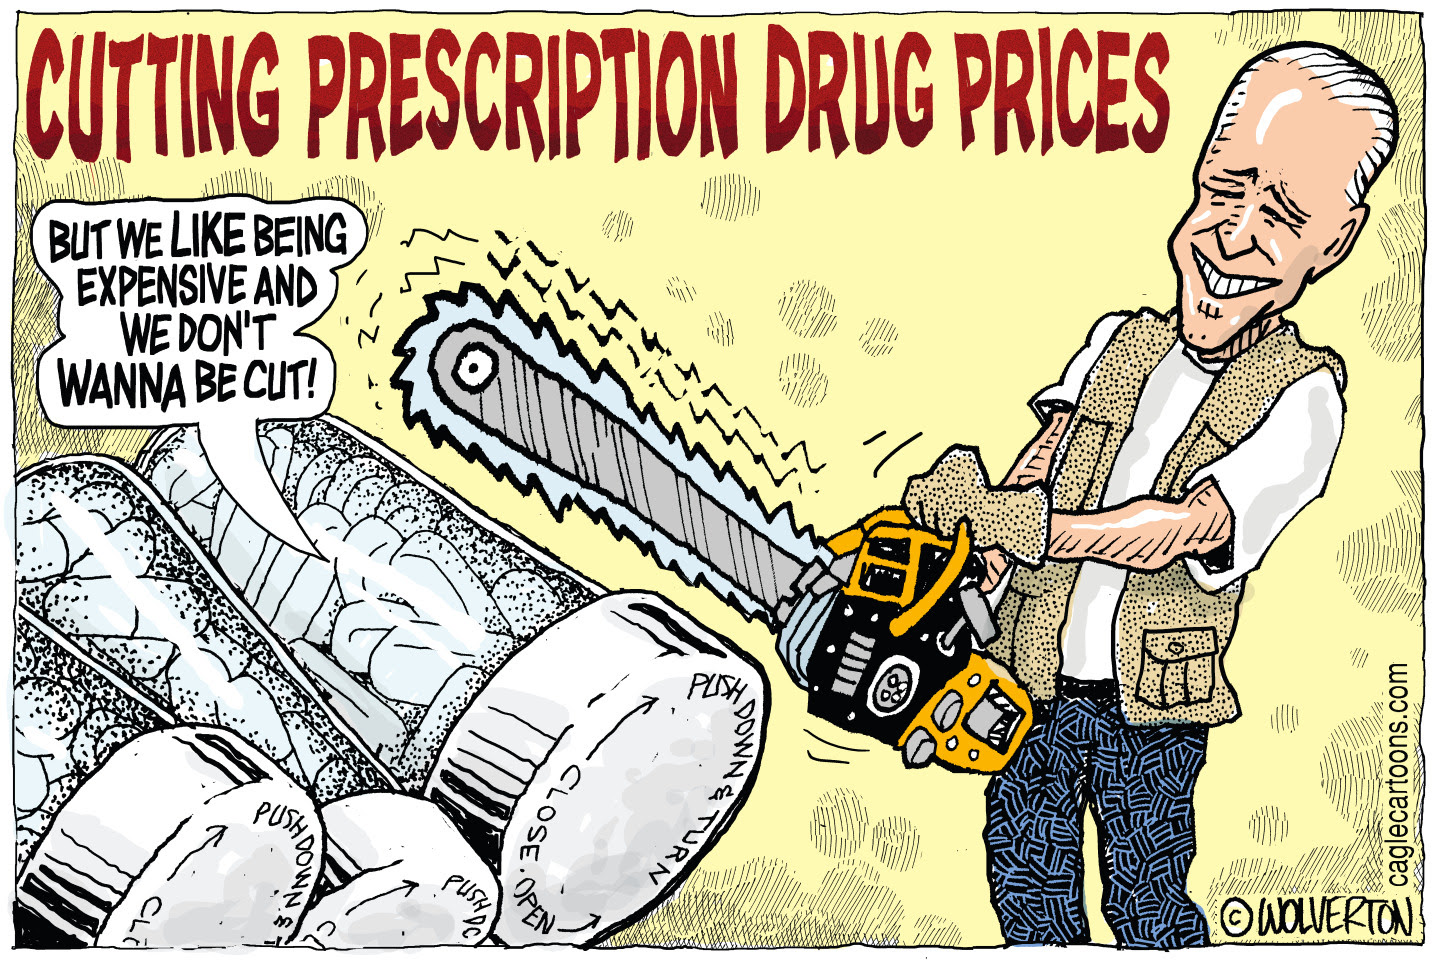 President Biden proposes cutting the price of prescription drugs.